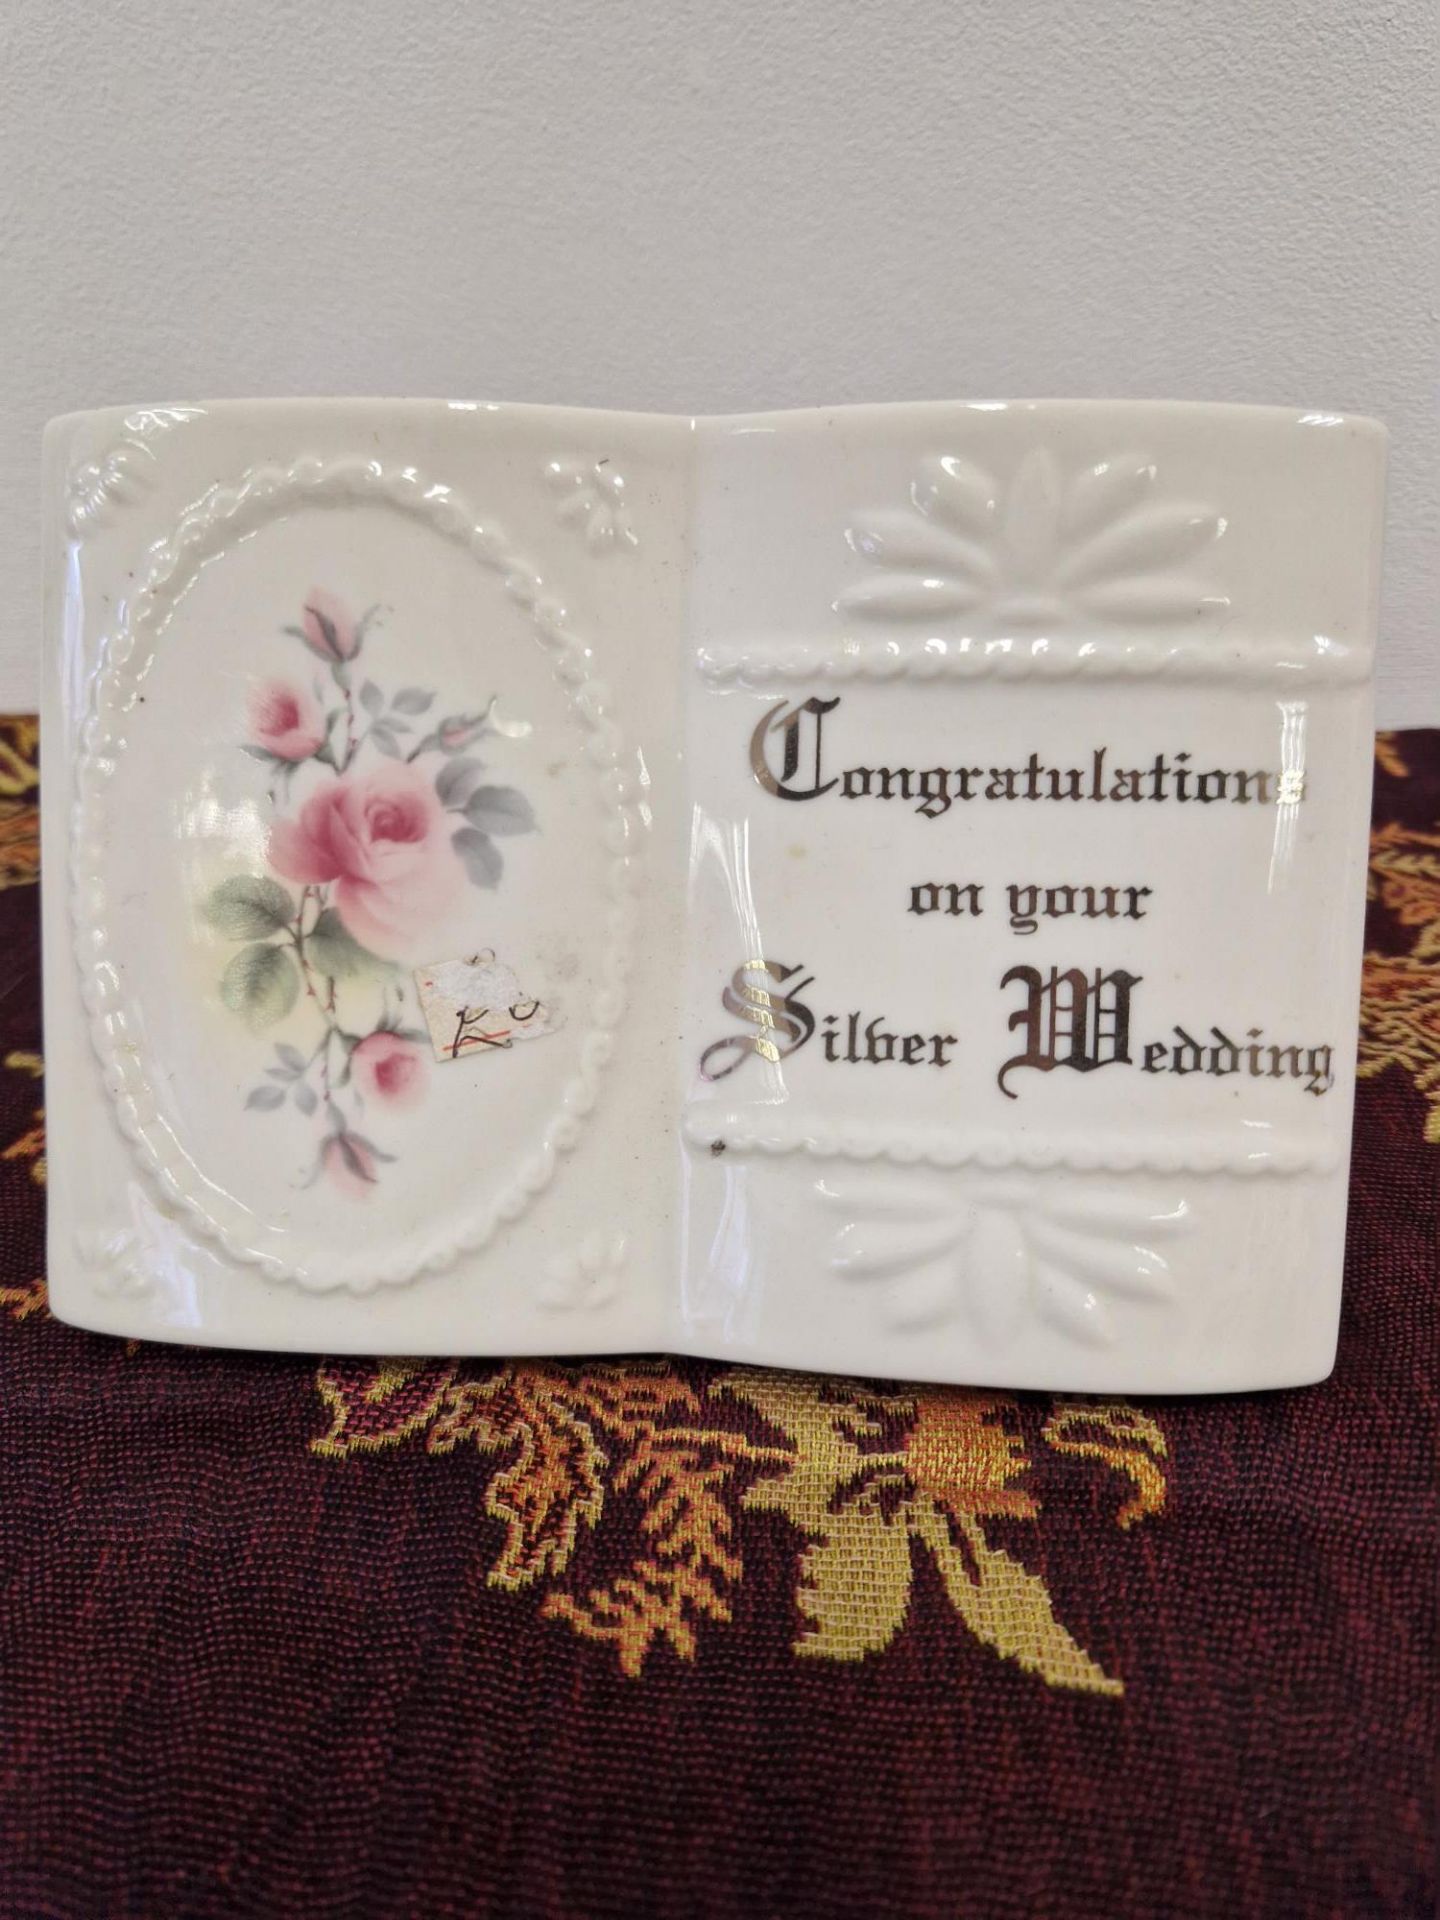 Congratulations on your silver wedding piece